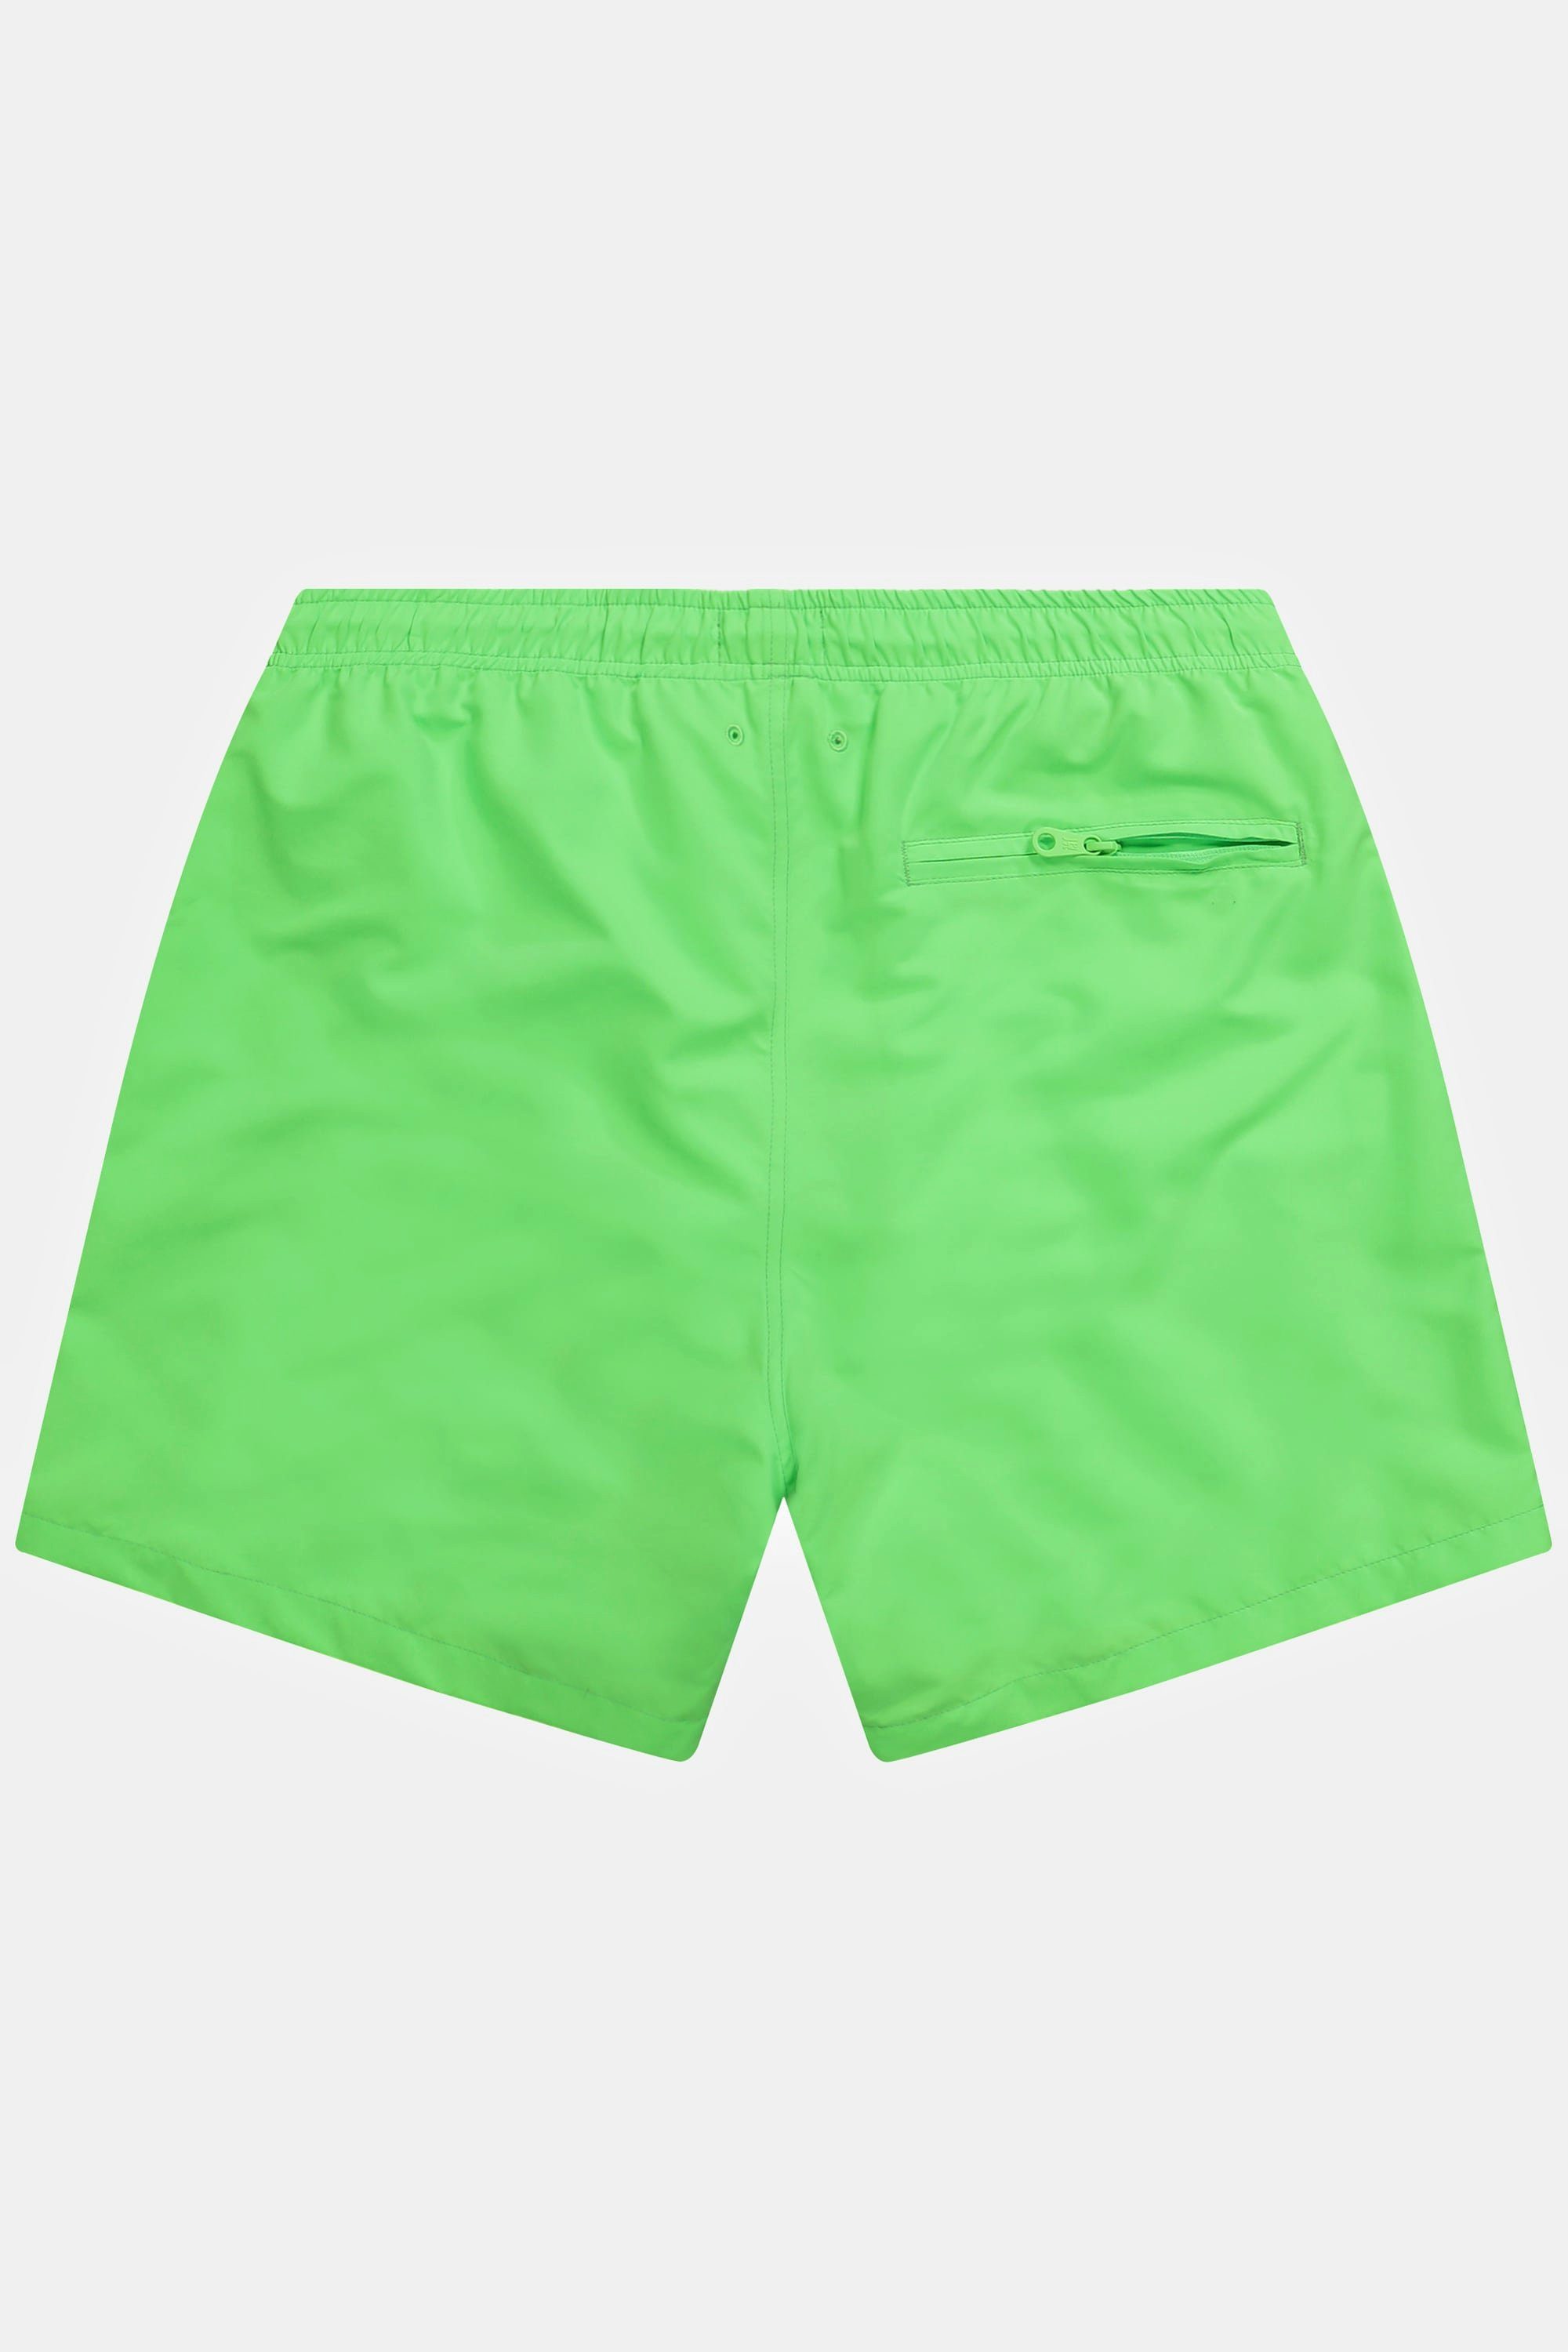 Badeshorts Elastikbund Badehose grün Zipptasche Beachwear JP1880